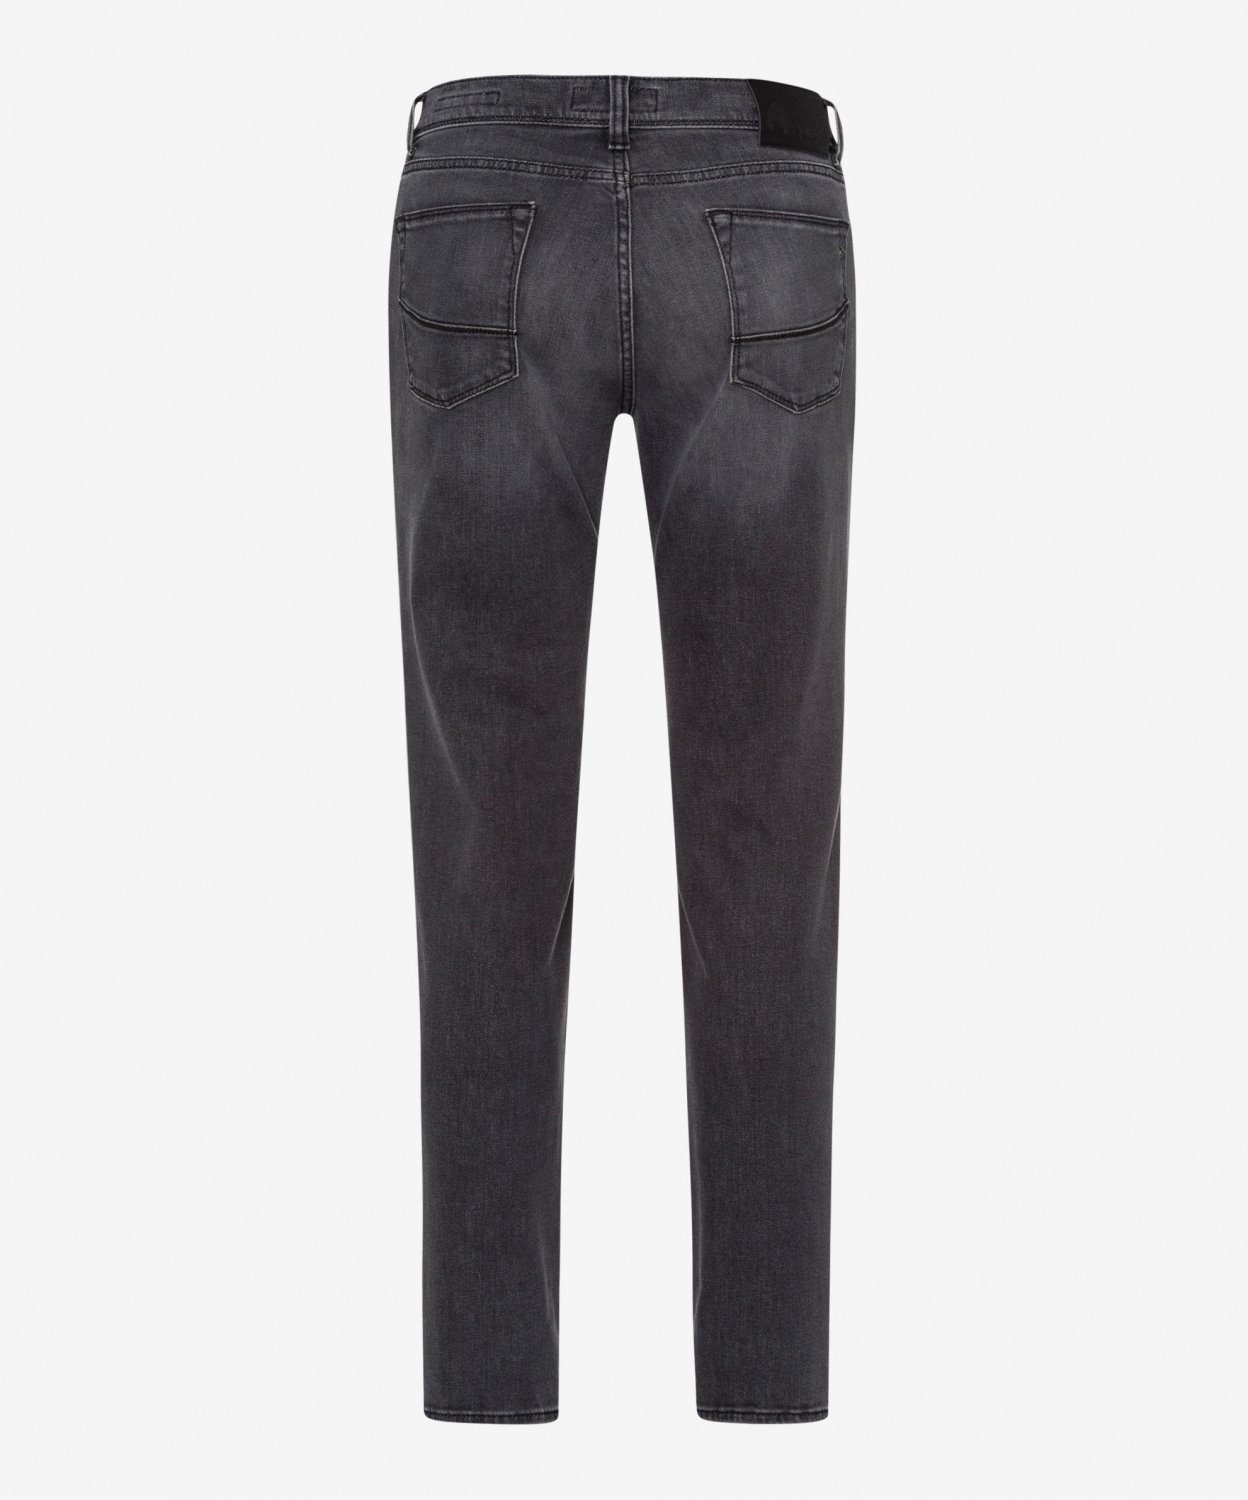 grey Brax Cadiz Herren steel Jeans Style 5-Pocket-Hose